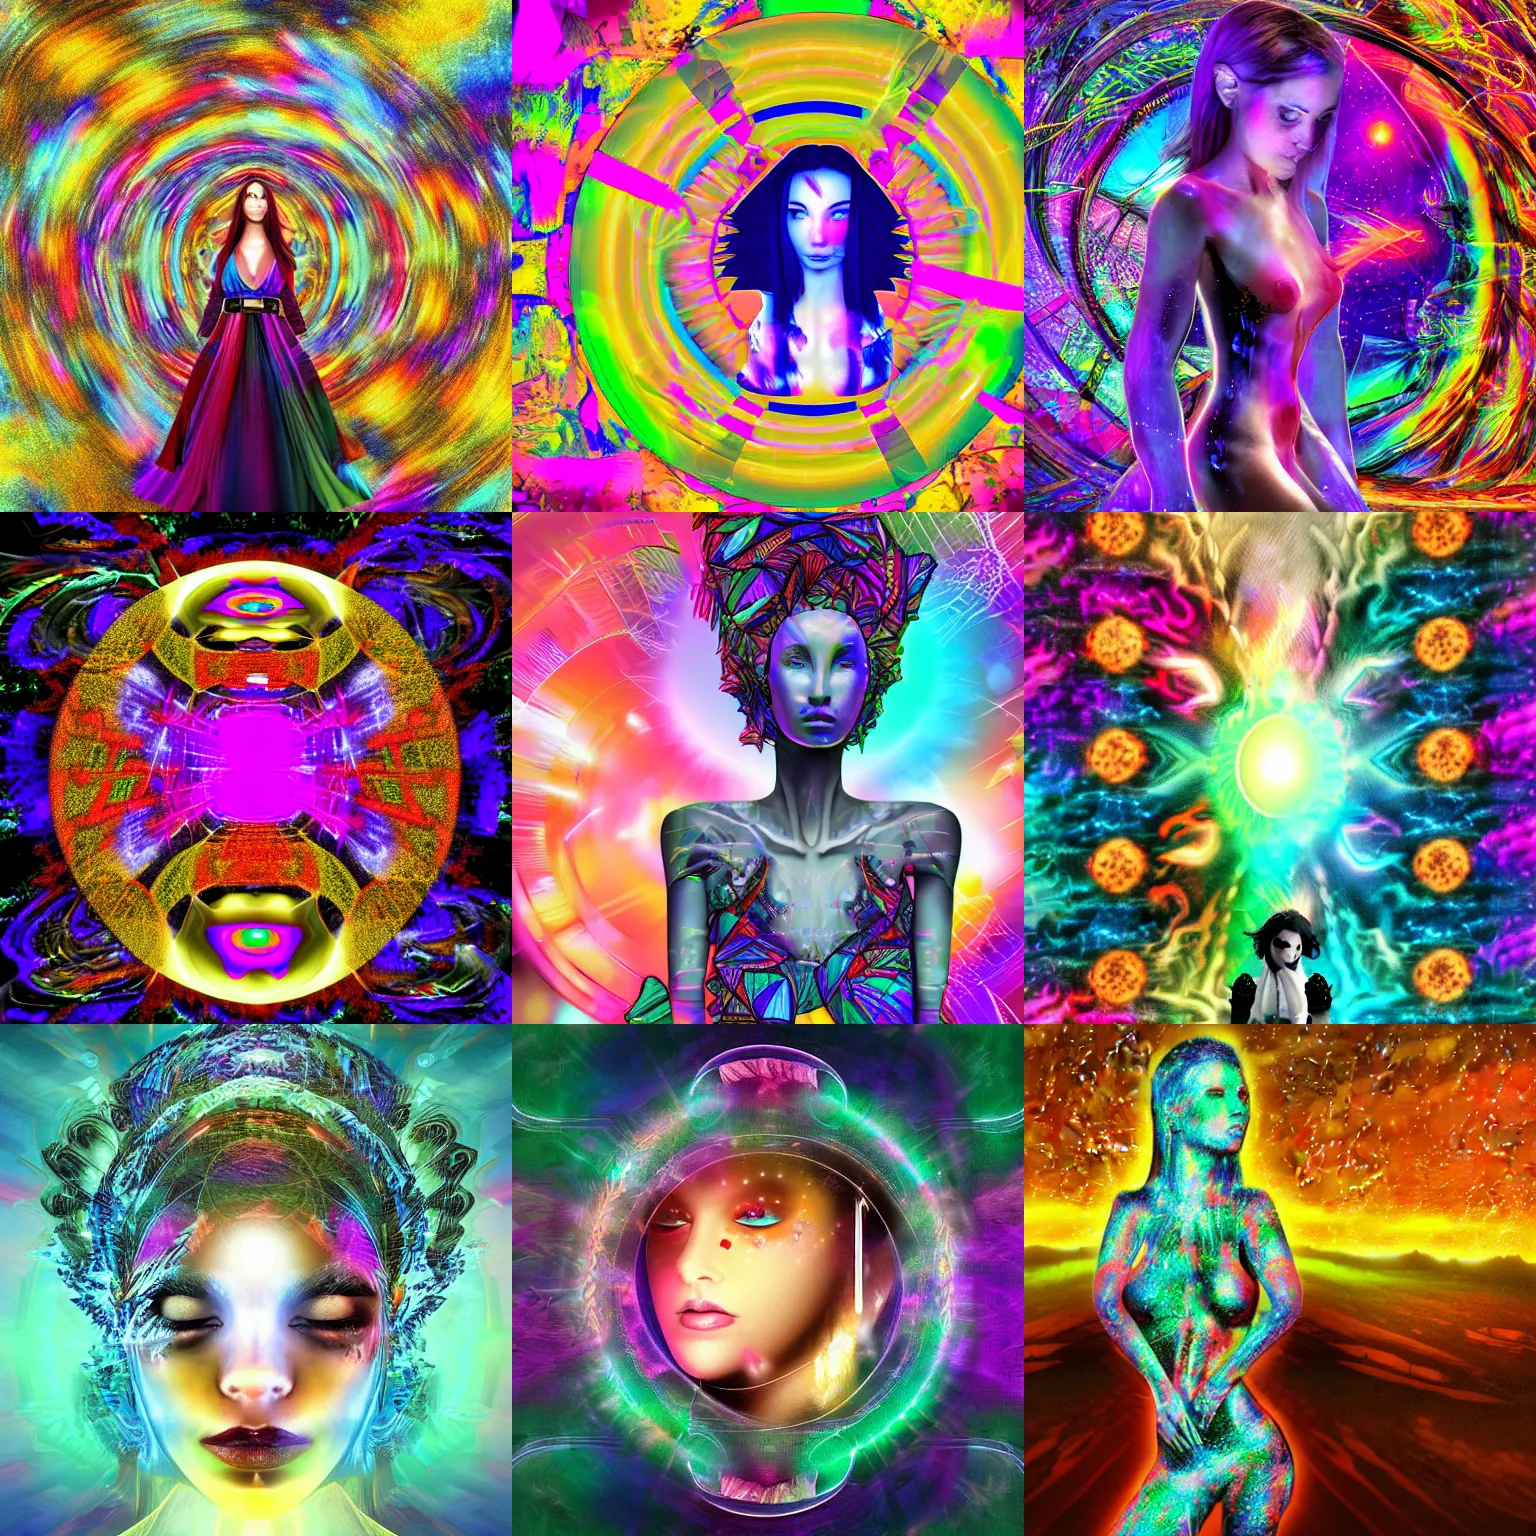 Prompt: digital art goddess entering the multiverse